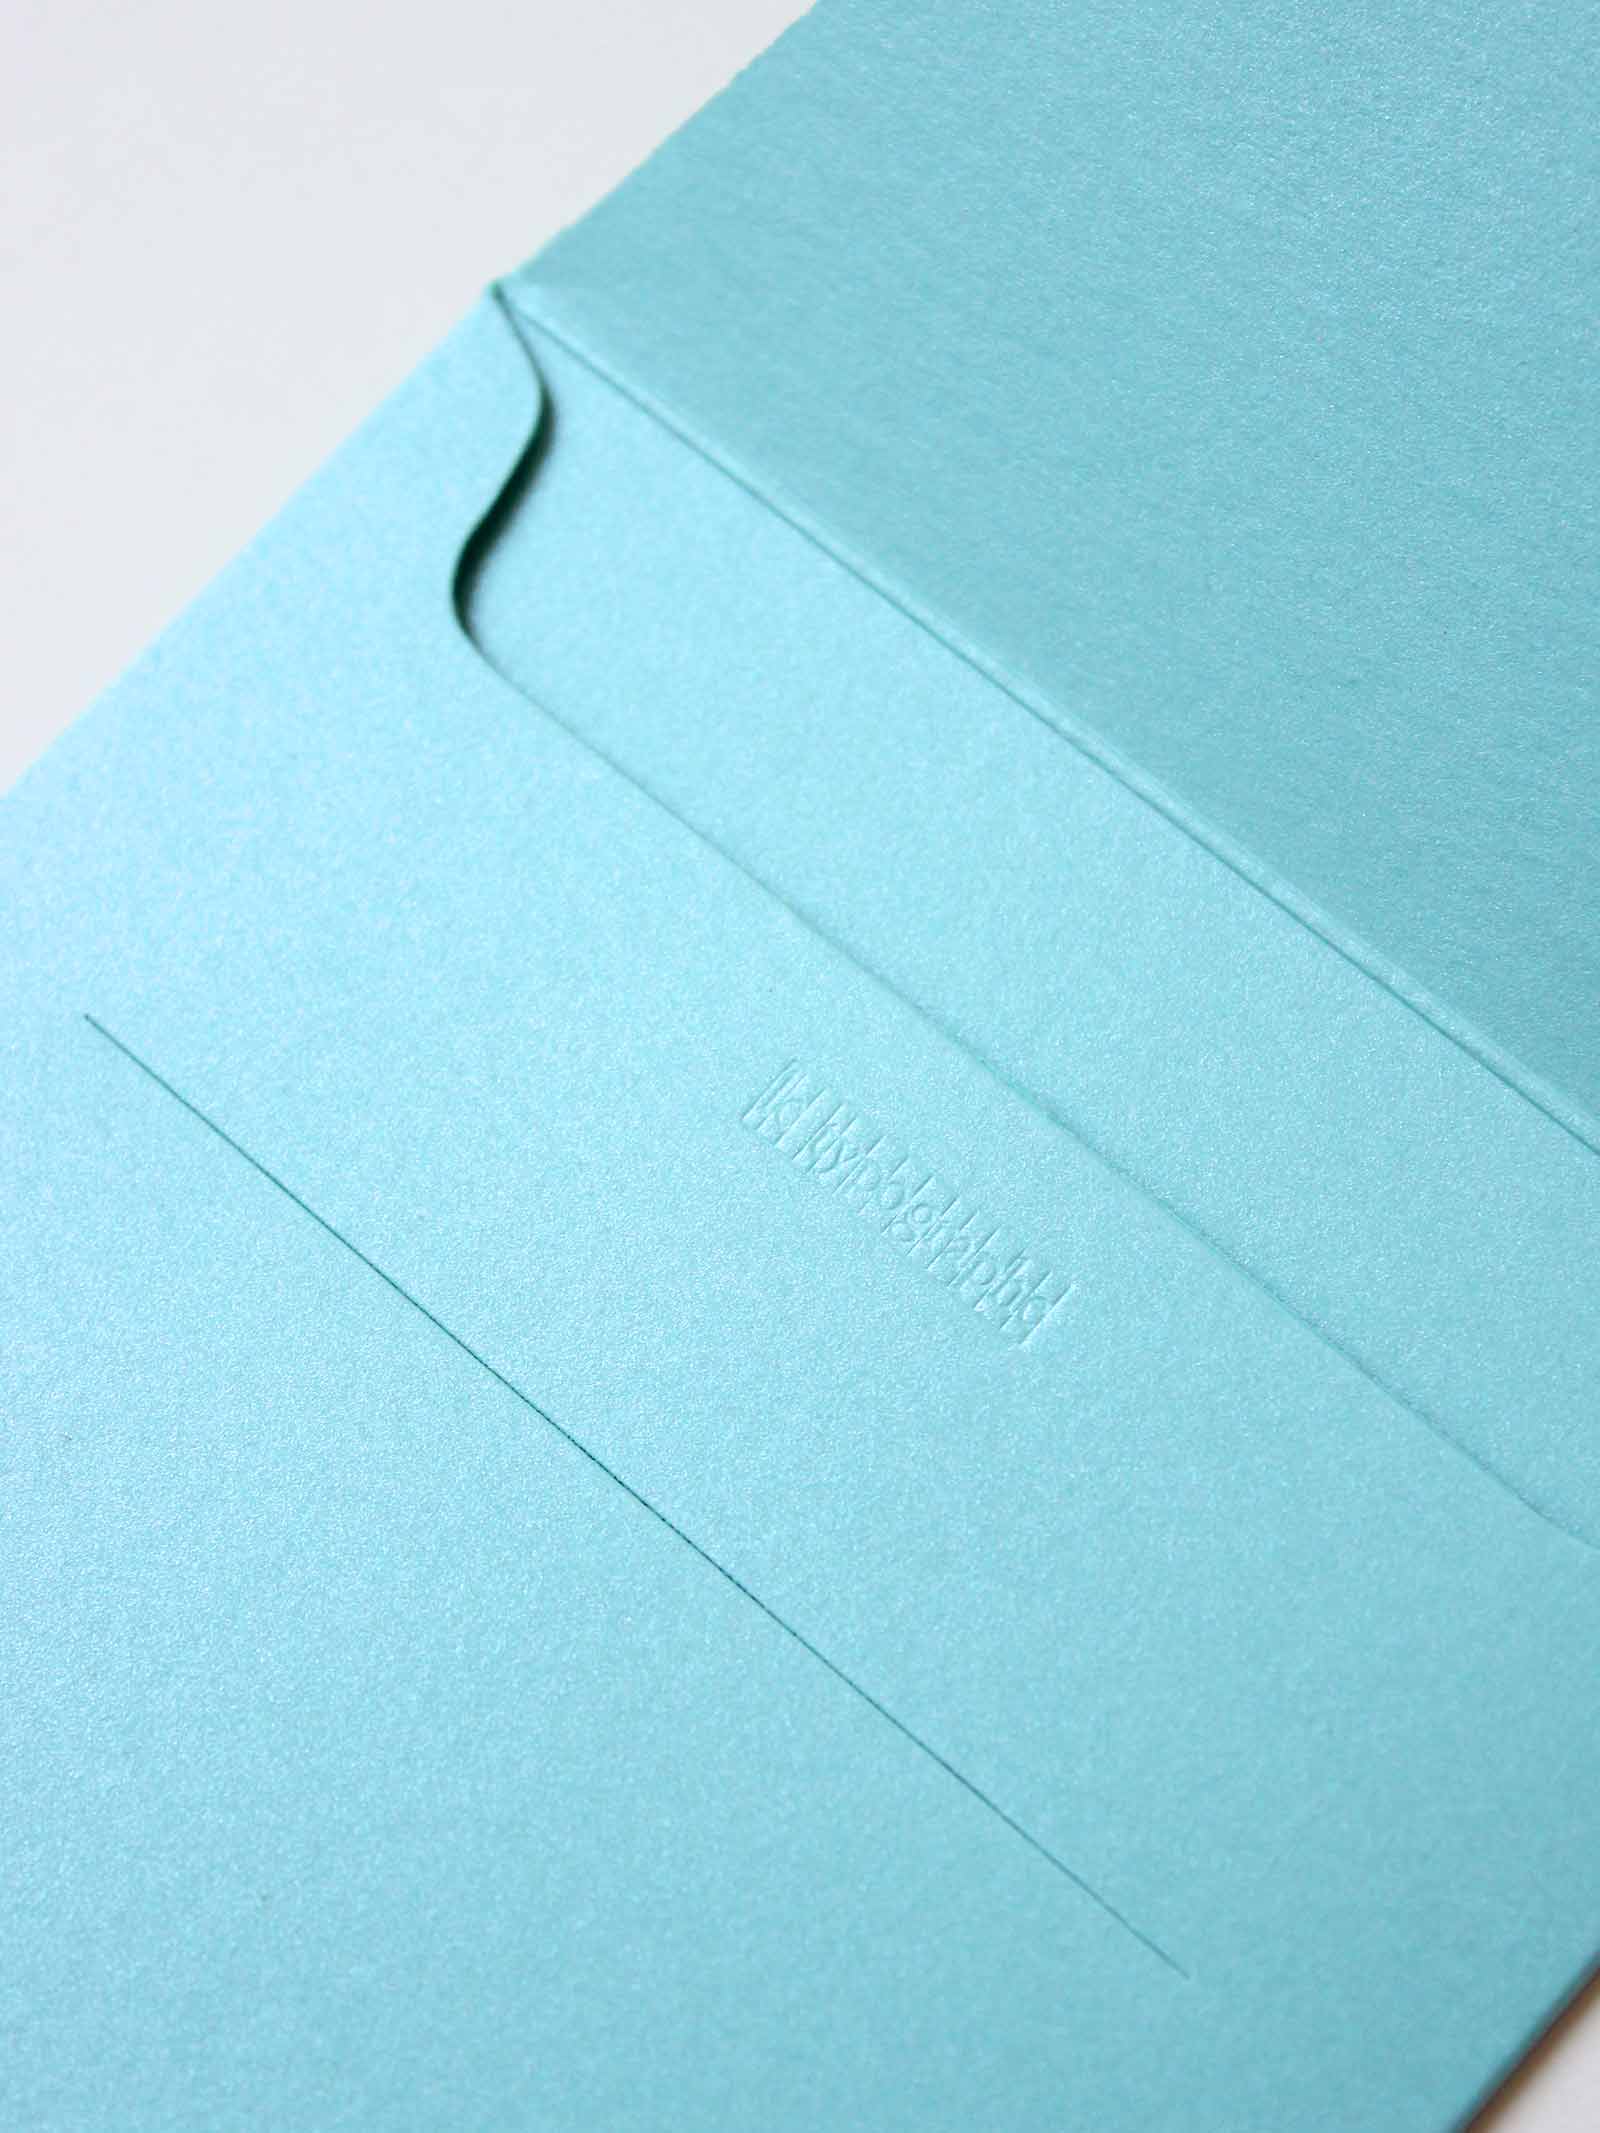 ECA010 - Enveloppe 11,4x16,2 cm - Couleur : Bleu océan